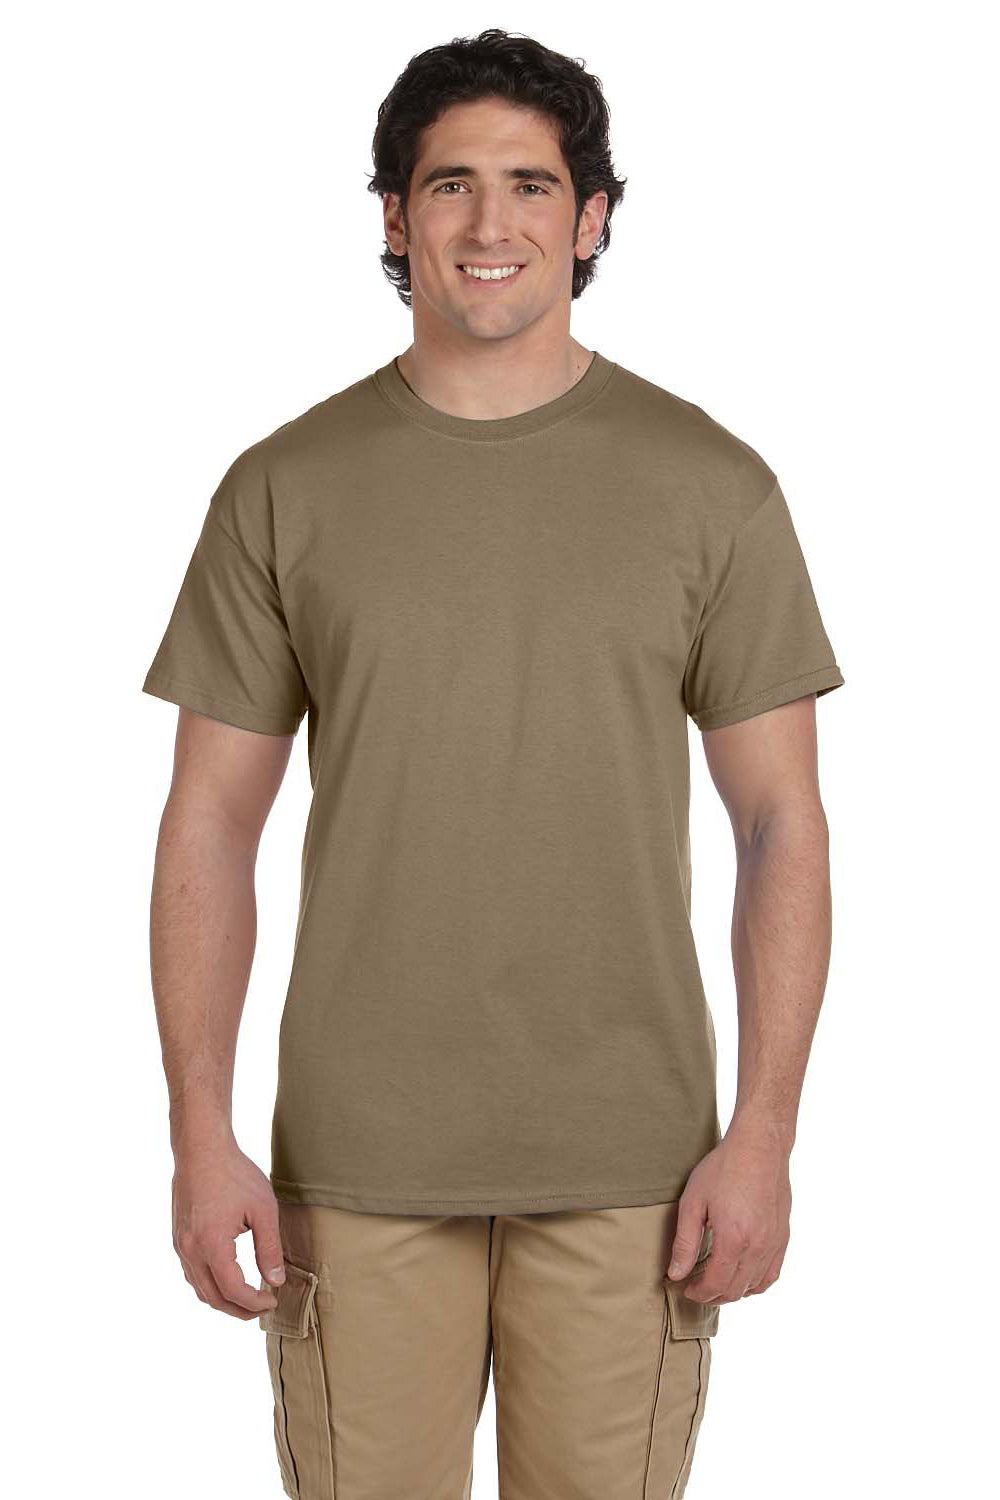 Fruit Of The Loom 3931 Mens HD Jersey Short Sleeve Crewneck T-Shirt Safari Brown Front